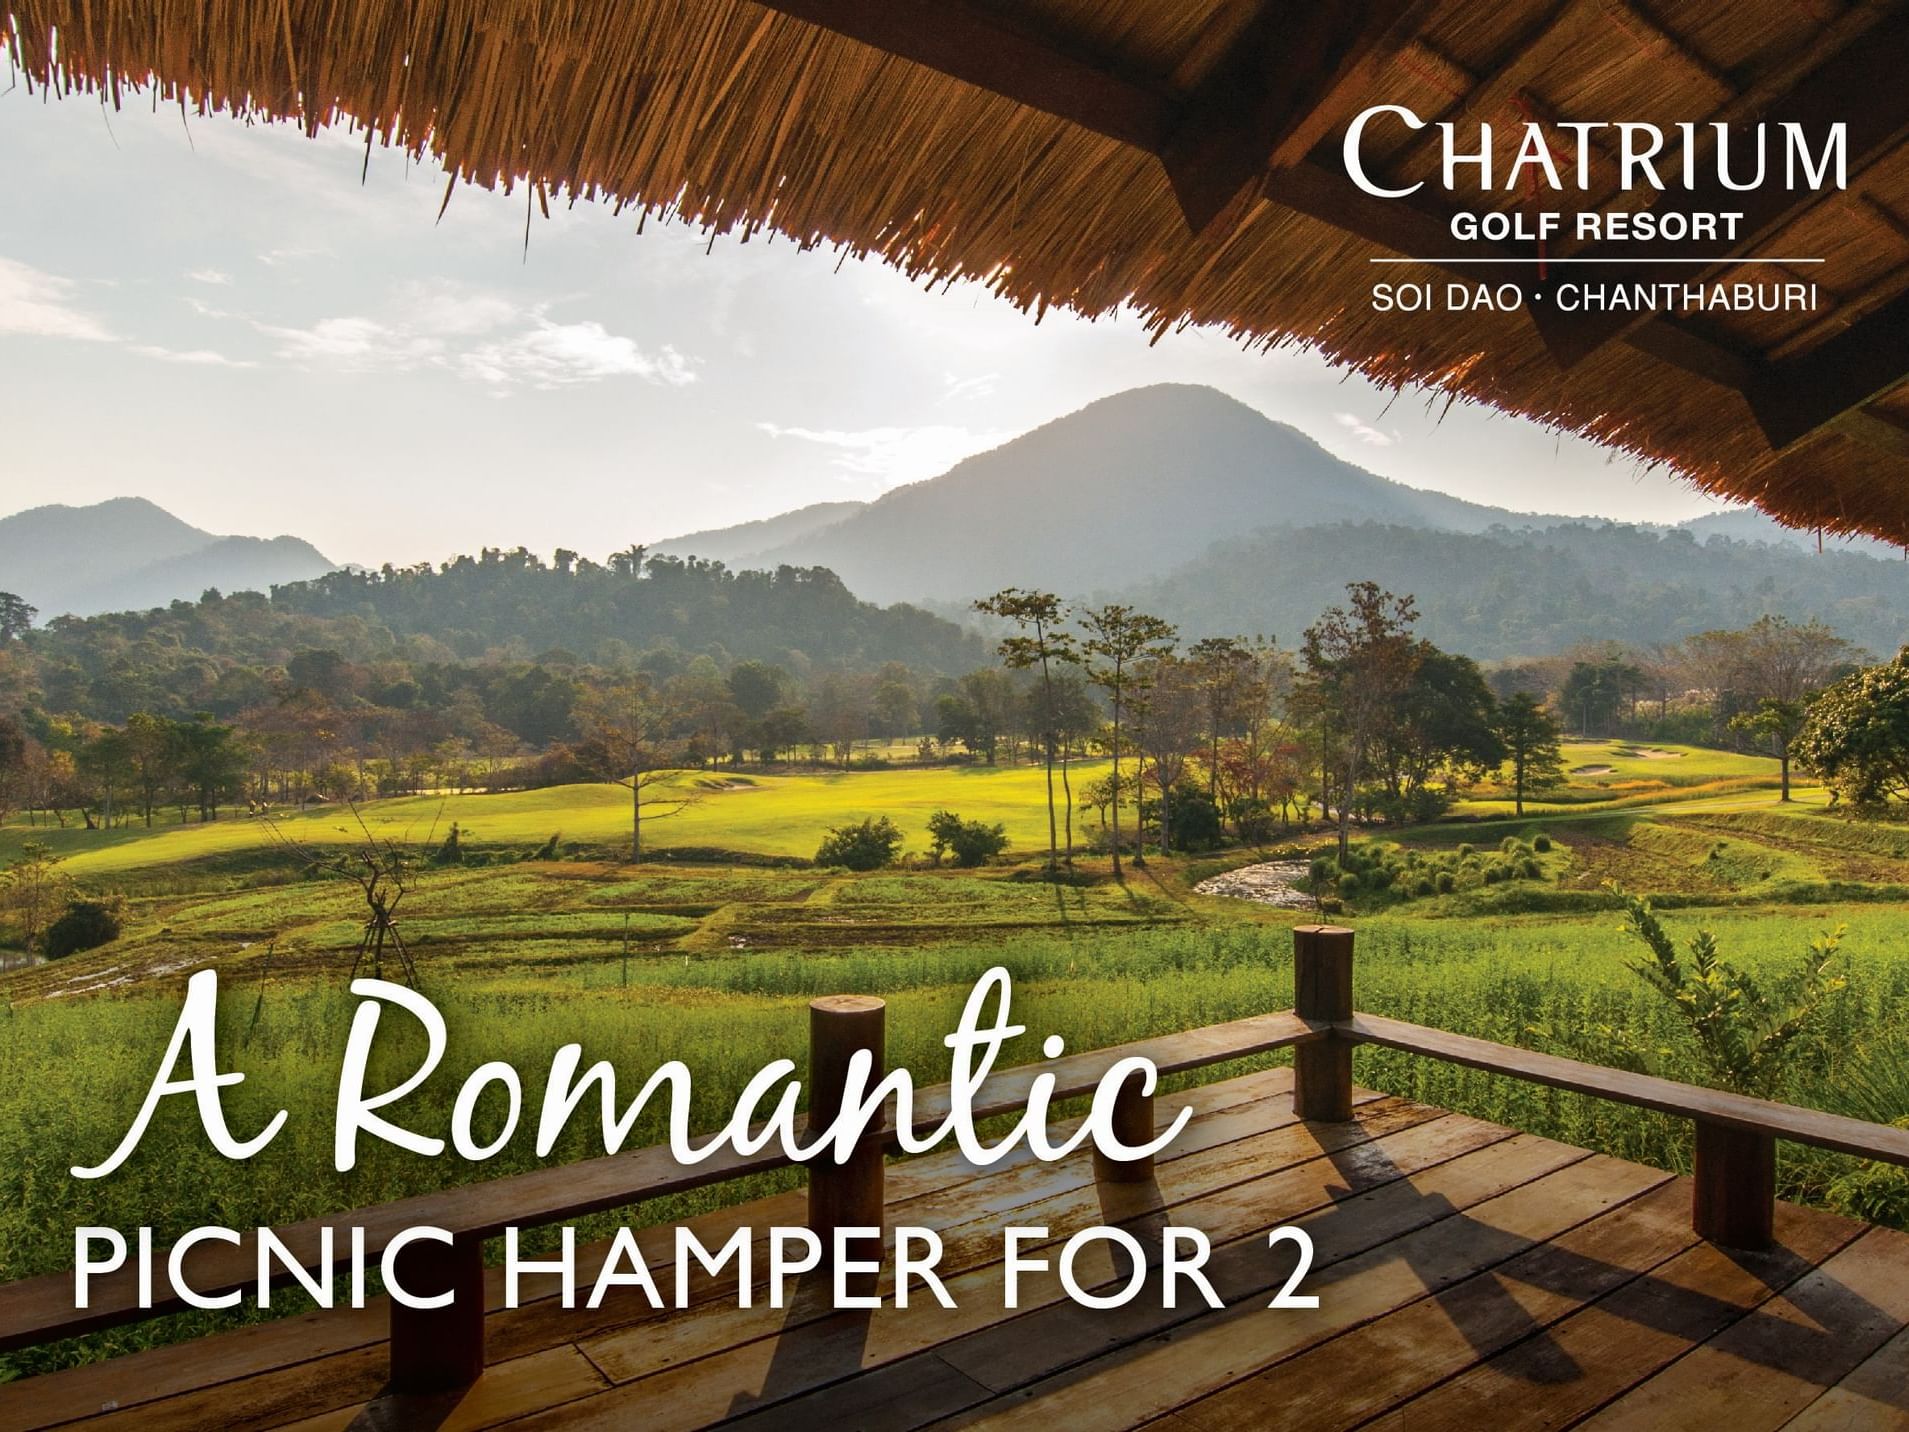 View of Romantic Picnic Hamper at Chatrium Golf Resort Soi Dao